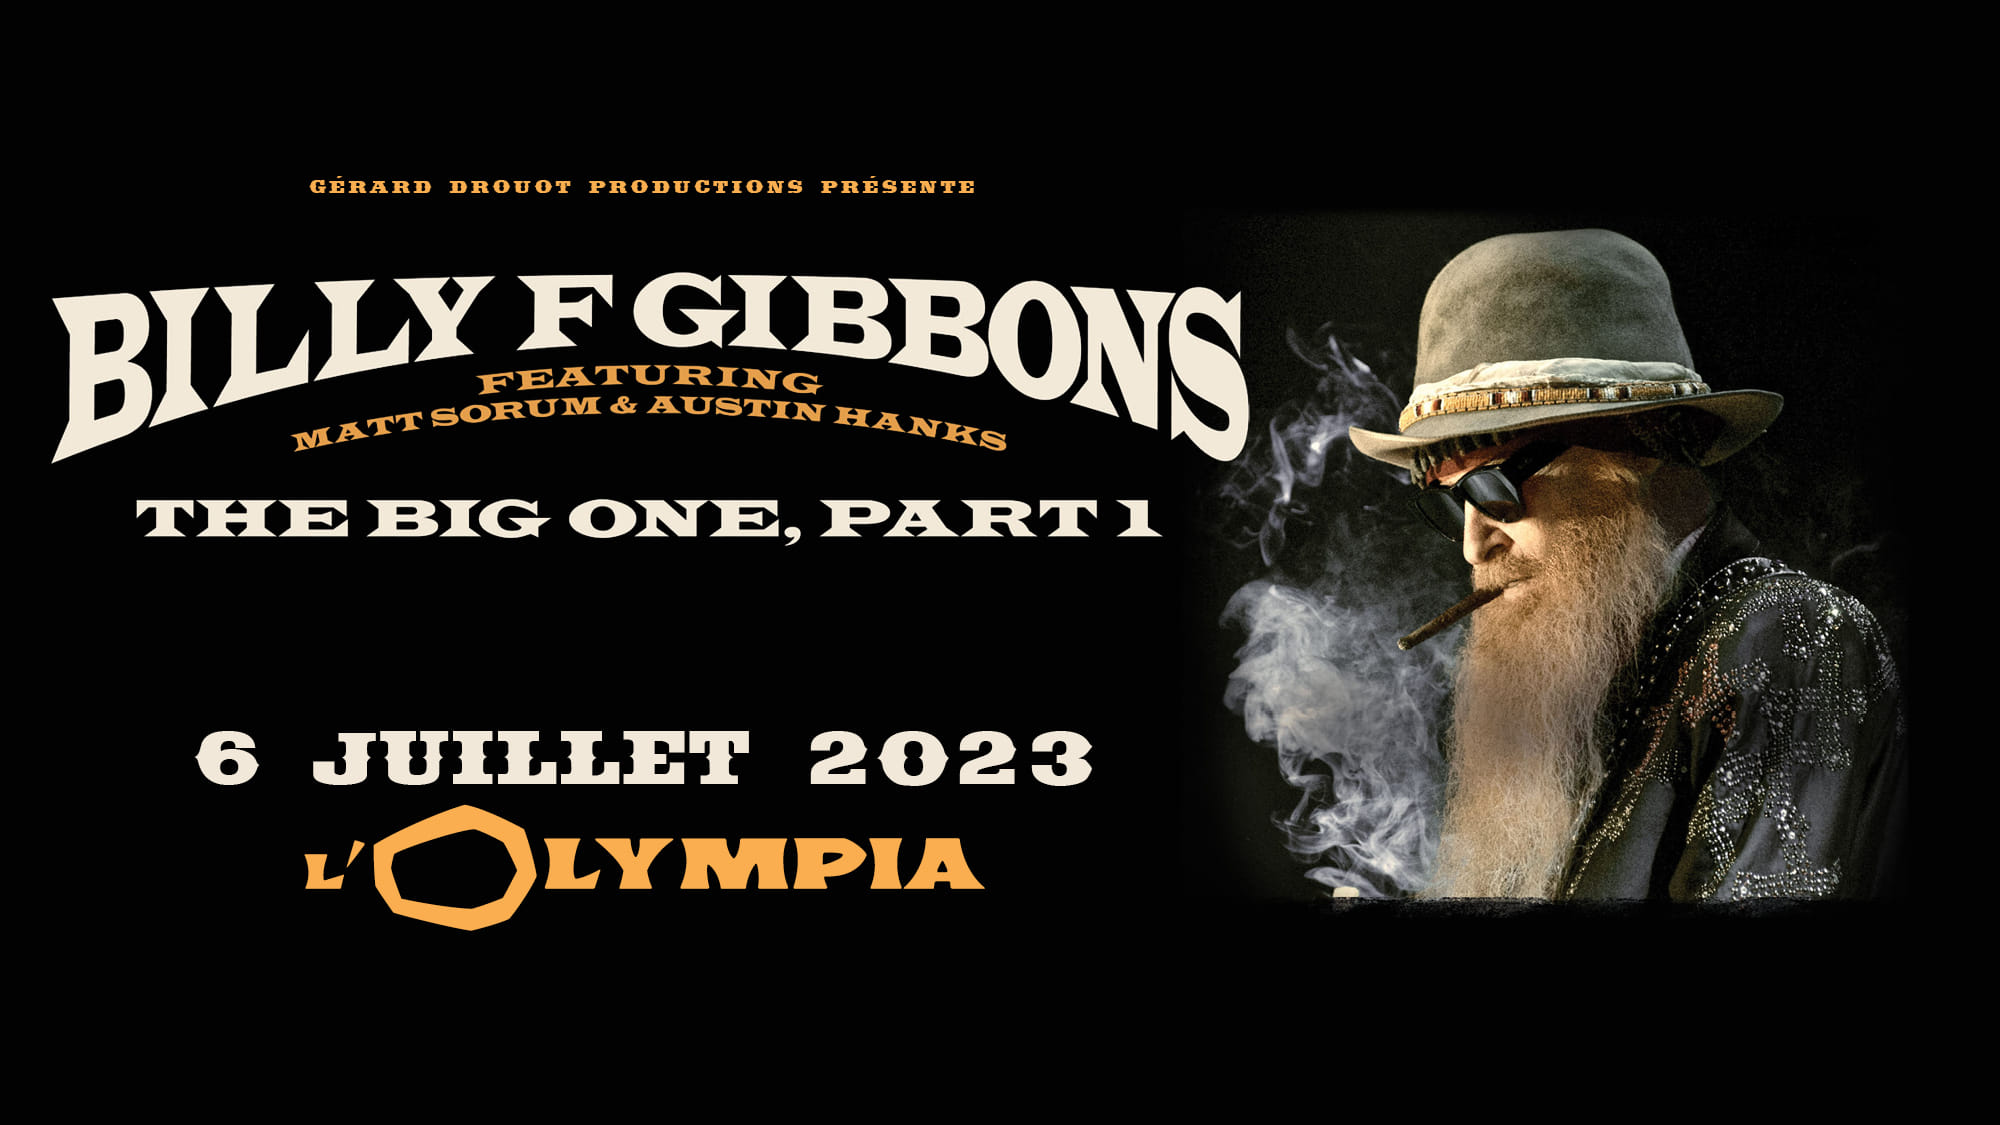 Slash France matt sorum olympia 2023 juillet billy gibbons live concert